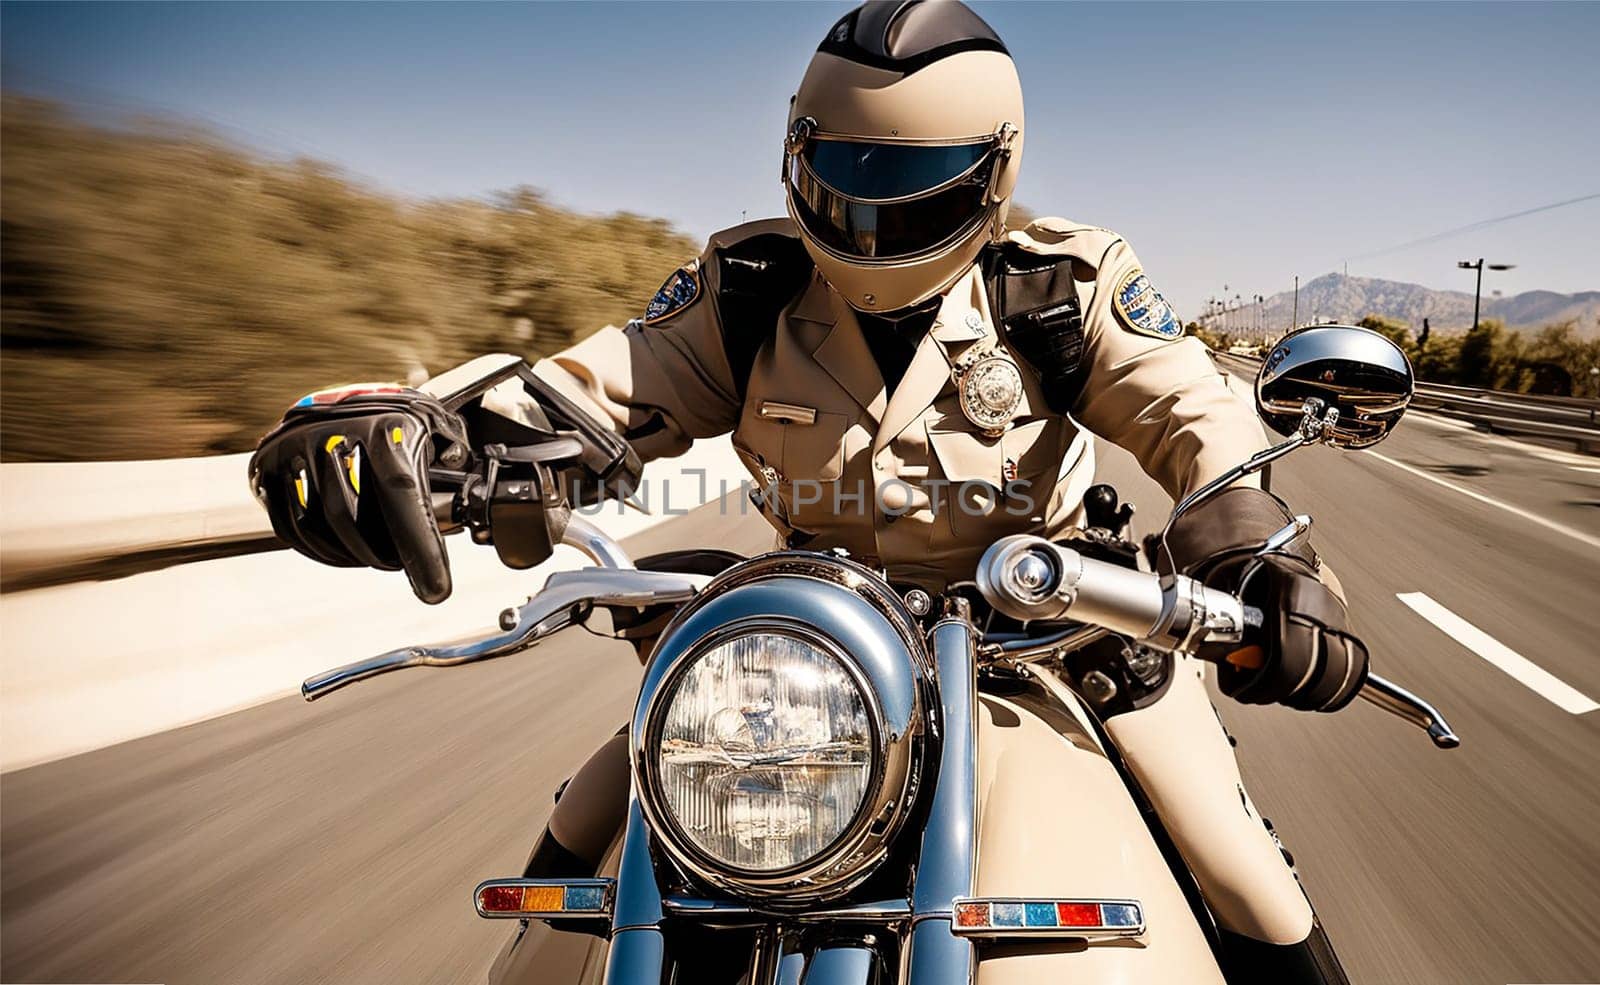 fantasy comics veteran chips police patrol on motorbikes riding steampunk bikes funny postcards by verbano